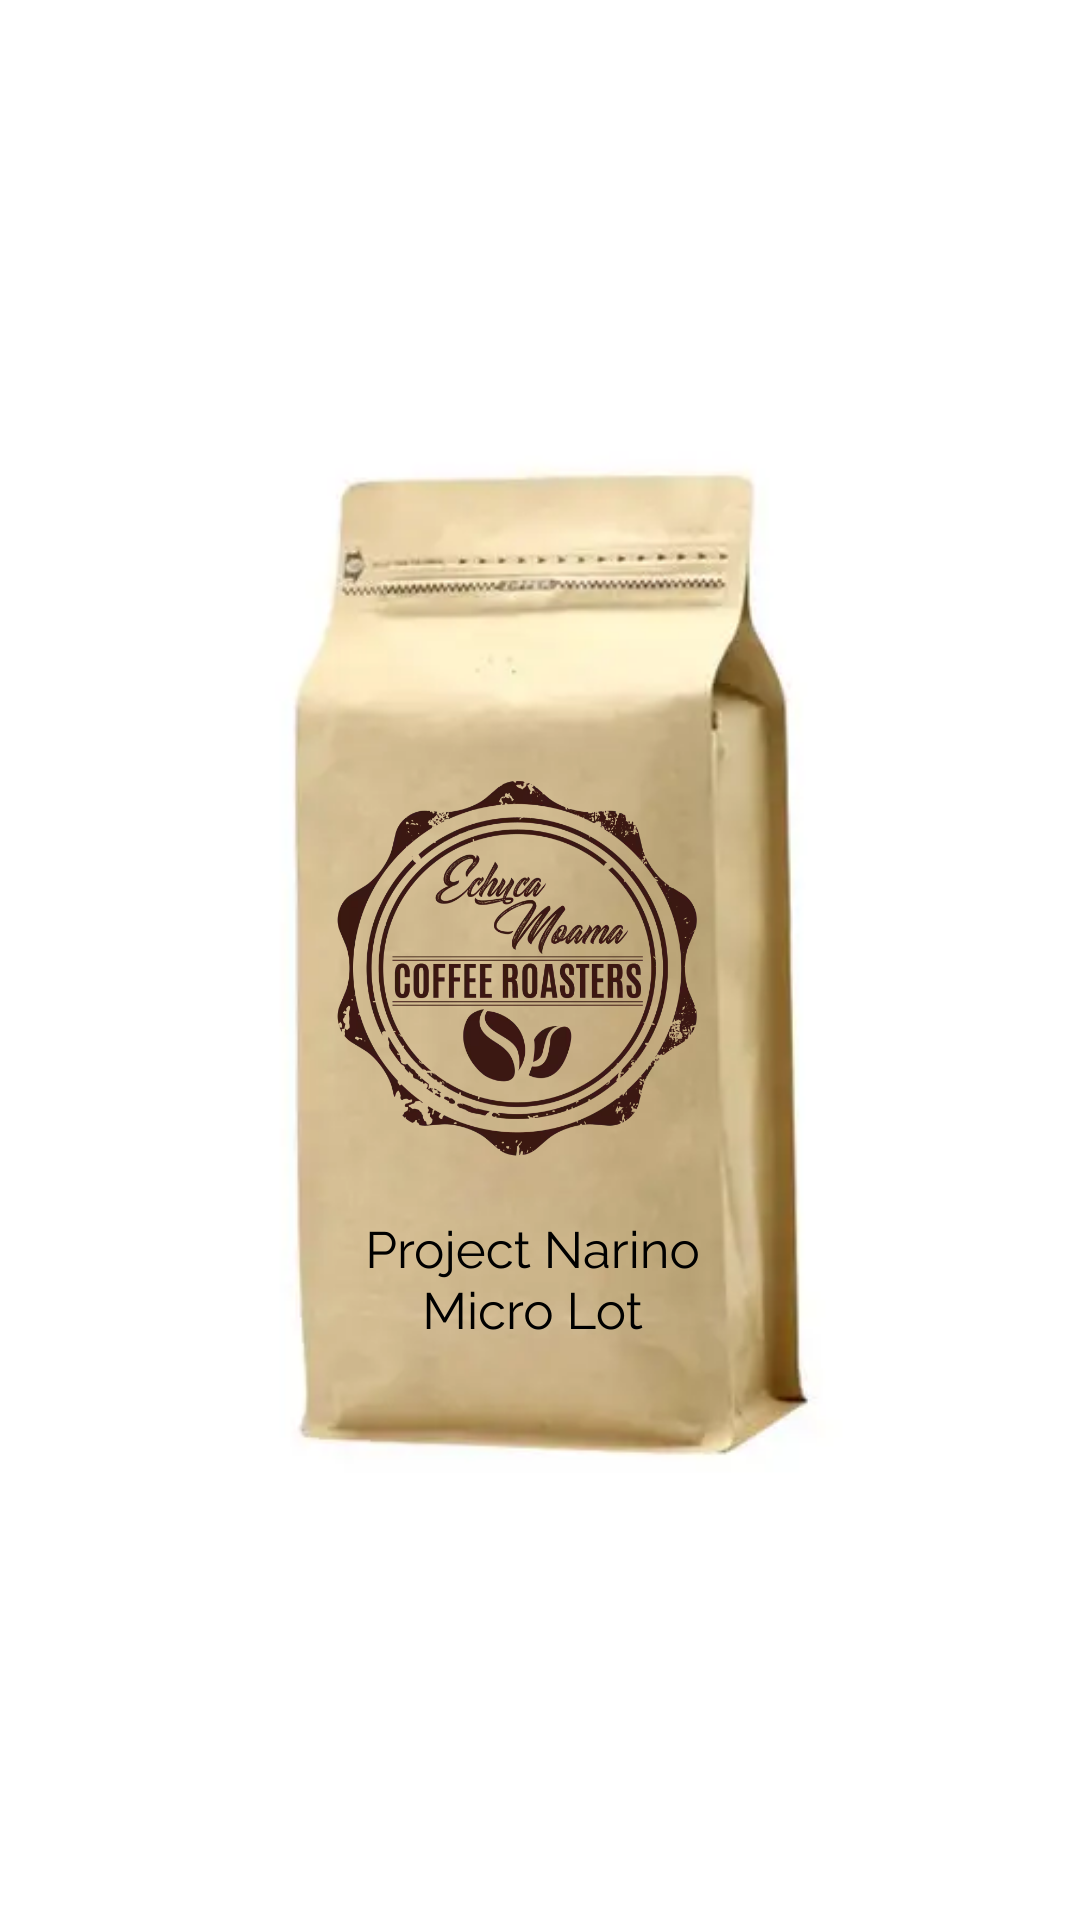 Project Nariño Coffee - Micro Lot